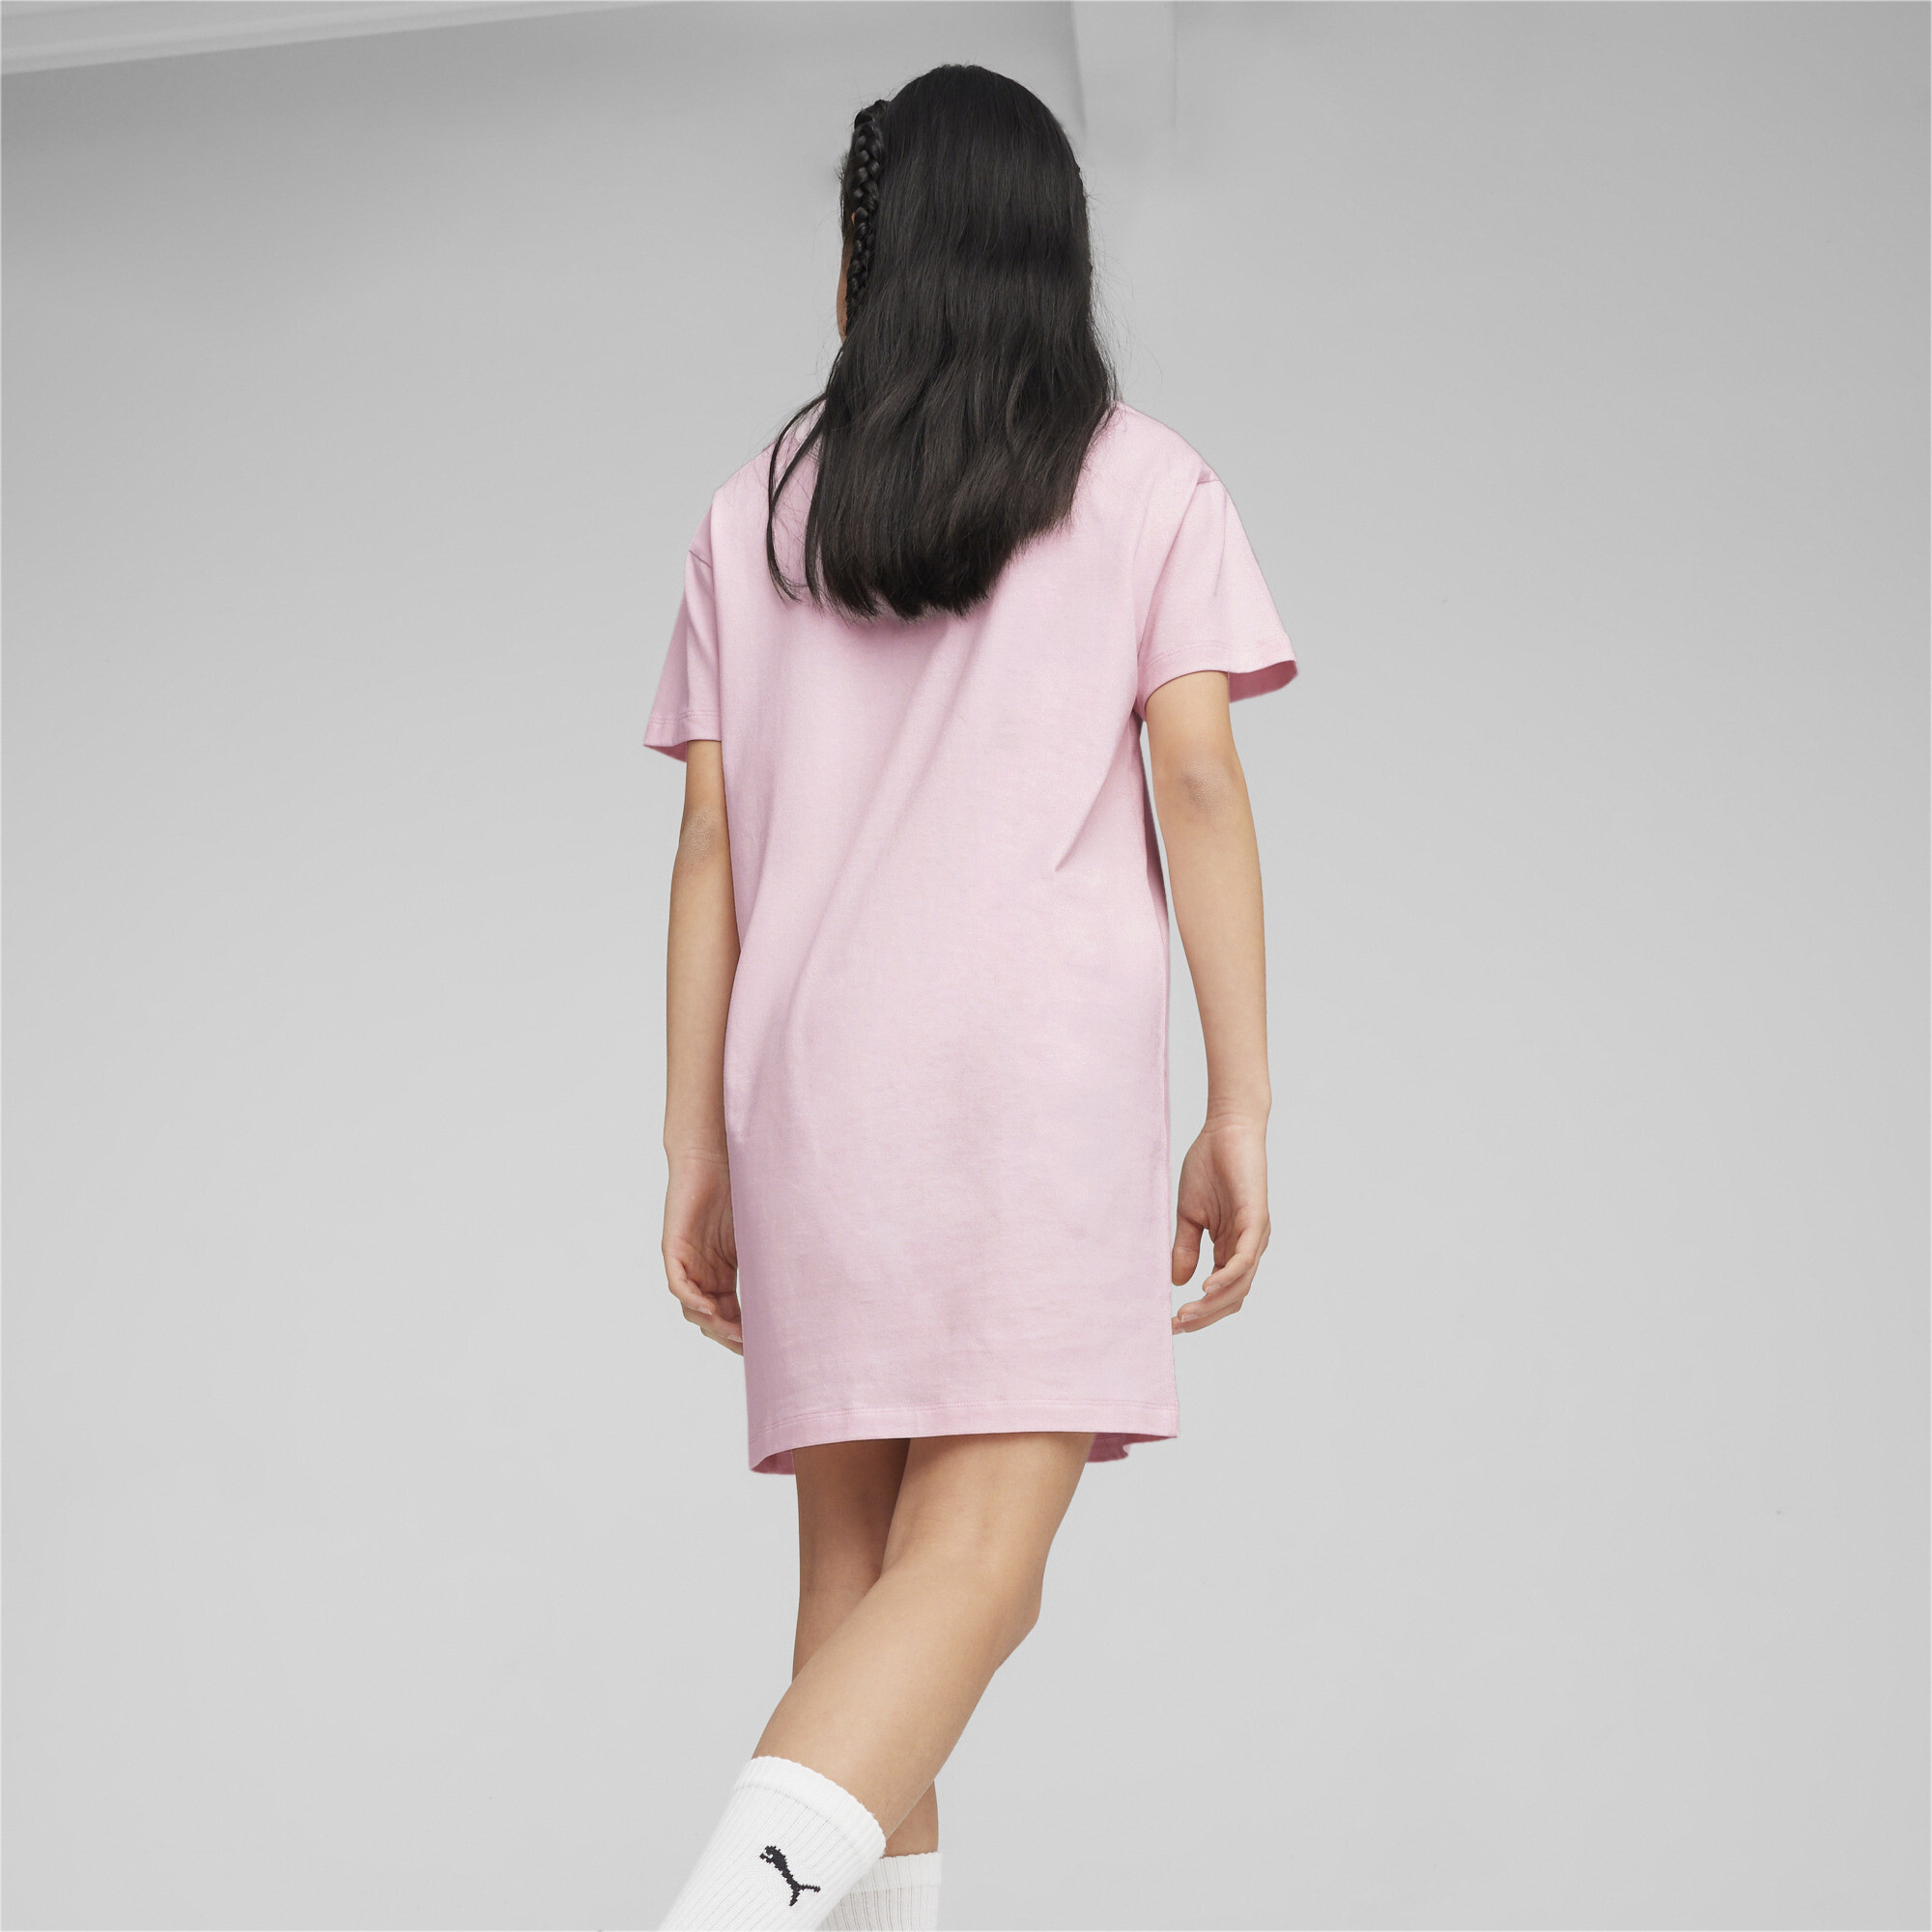 Puma BETTER CLASSICS Girl's Tee Dress, Pink, Size 7-8Y, Shop